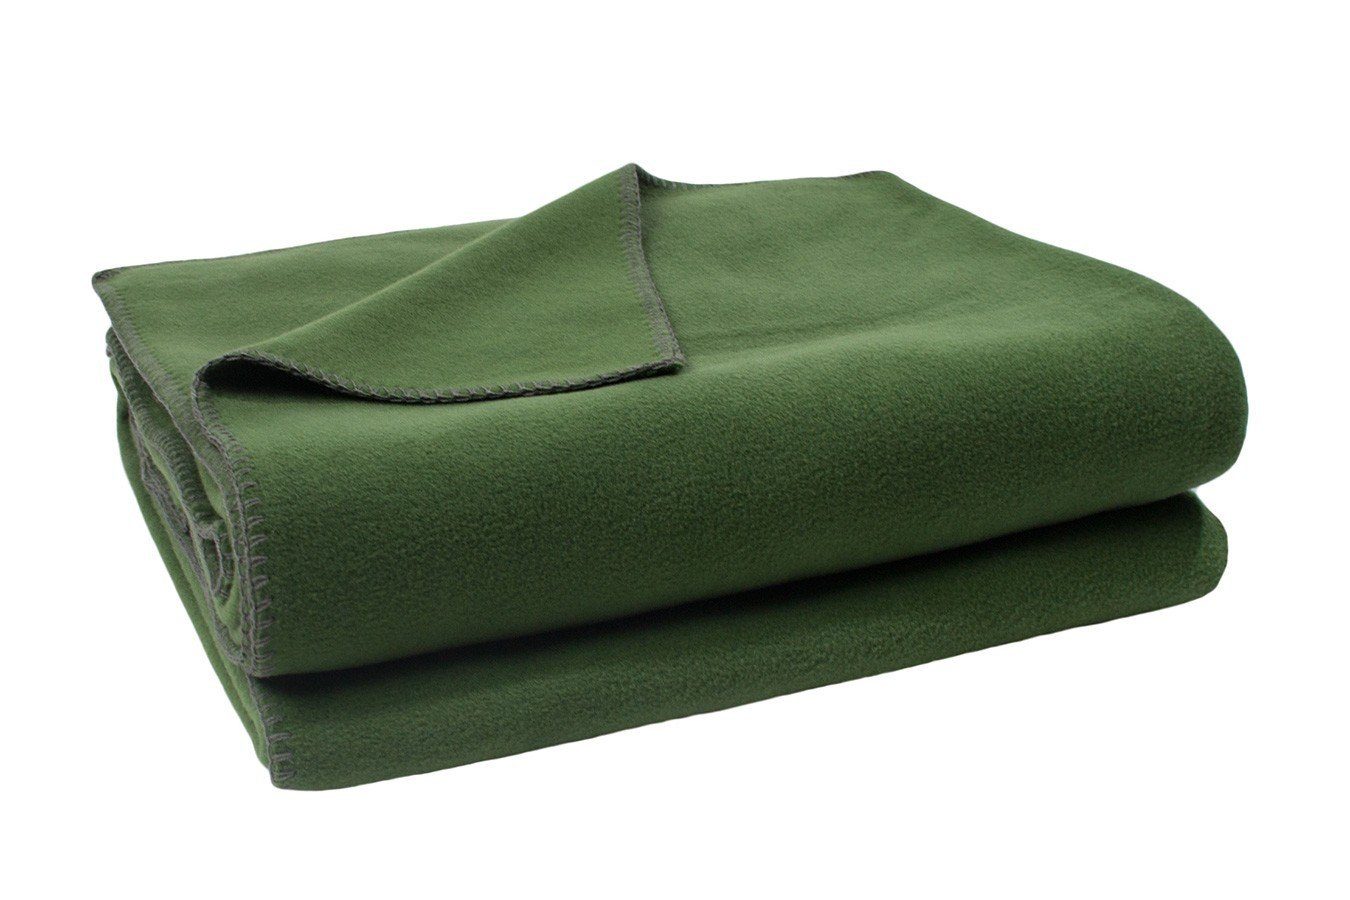 Wohndecke Soft-Fleece Decke 110 x daslagerhaus dunkeljadegrün, living cm 150